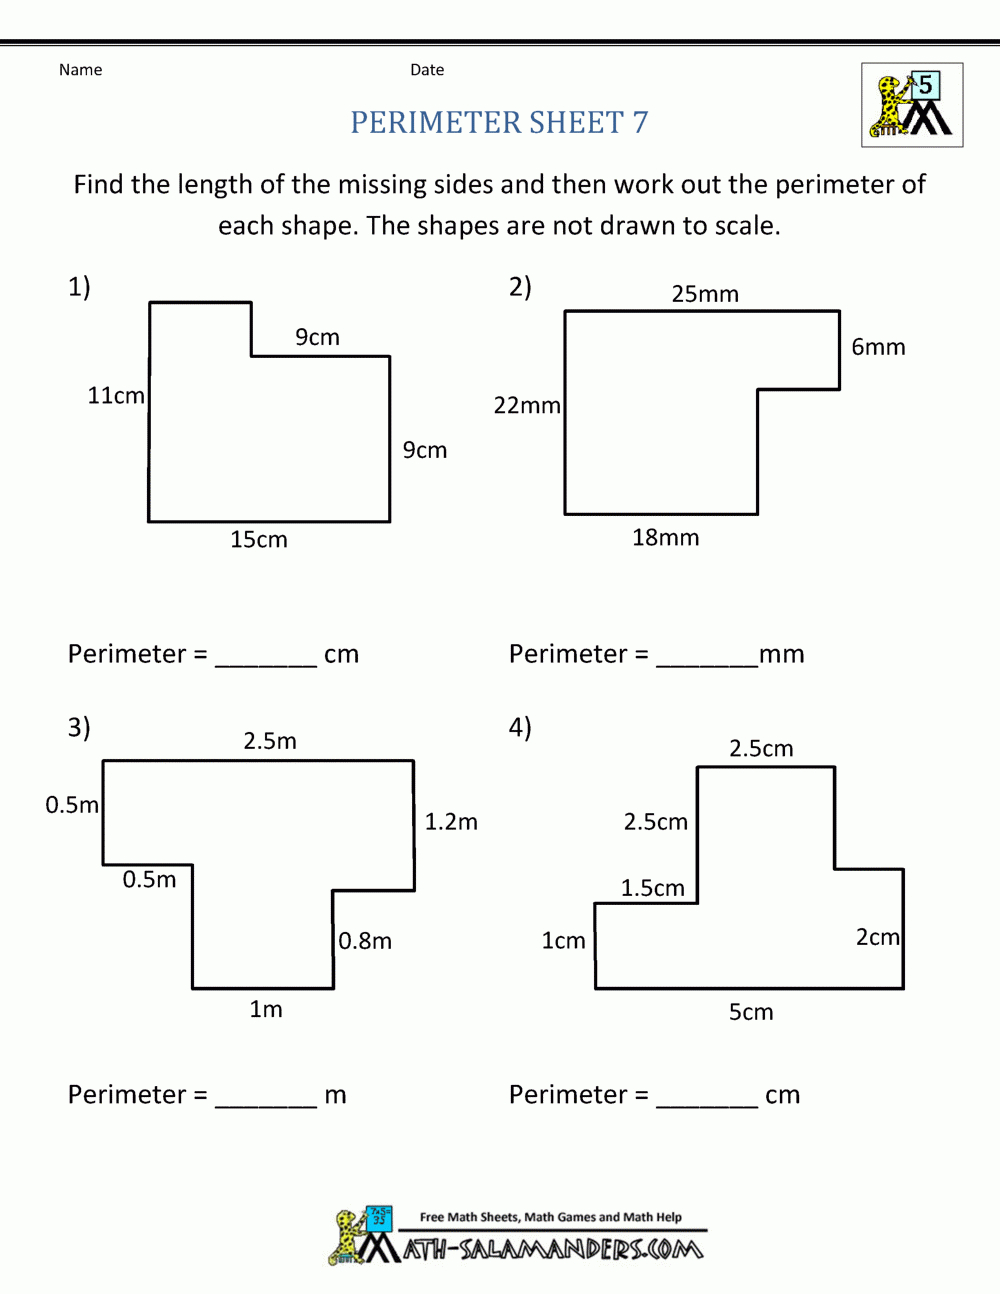 Perimeter Worksheet Not All Measurements Given Higher Level Free Printable Perimeter